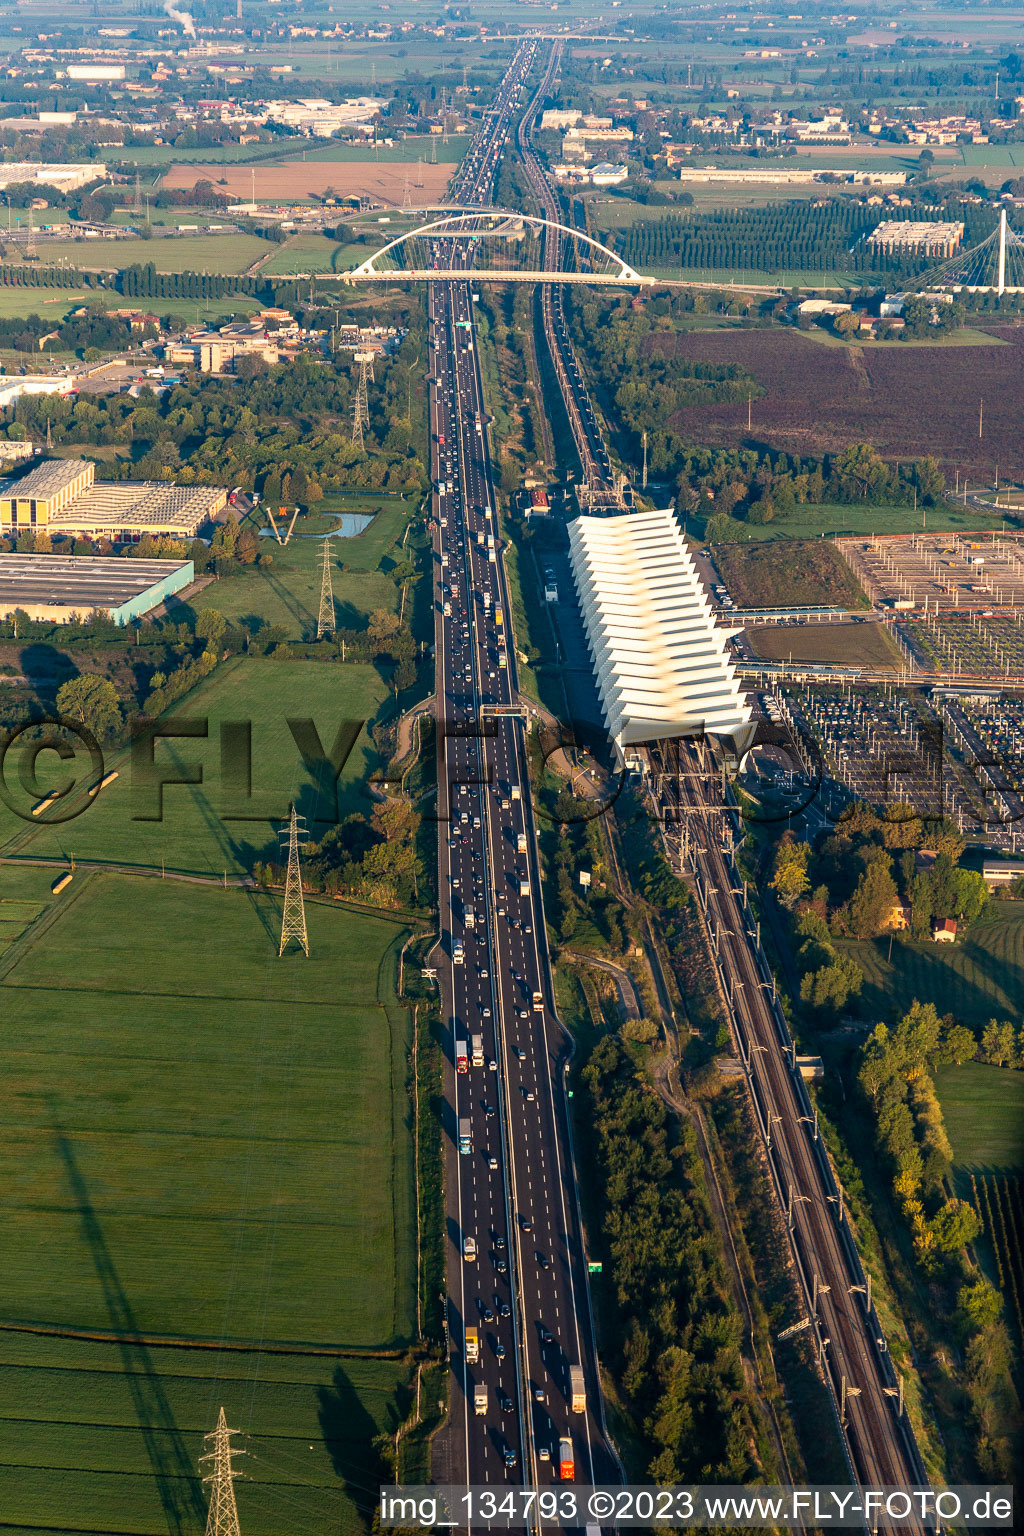 Luftbild von Bahnhof  Reggio Emilia AV Mediopadana in Reggio nell’Emilia, Italien